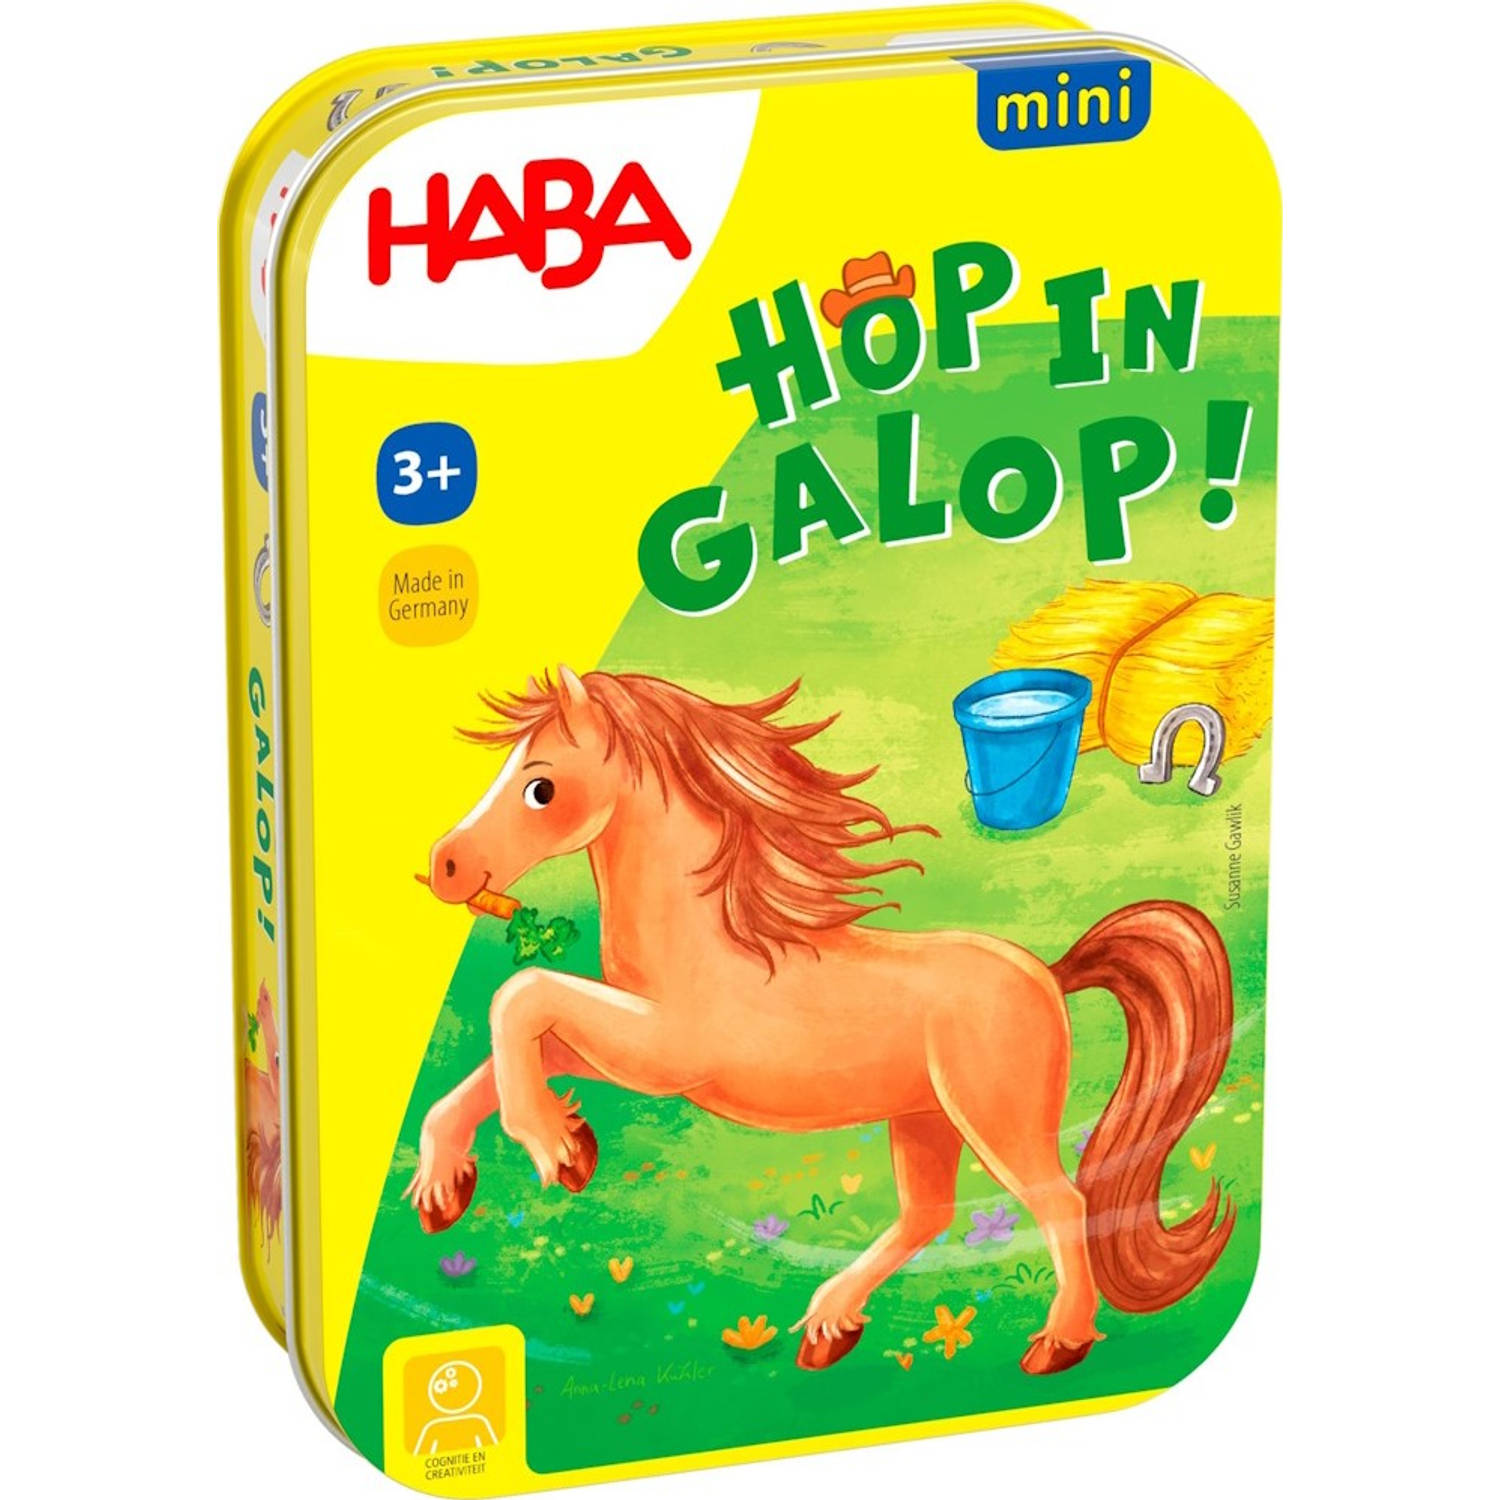 HABA Mini Spel Hop in galop